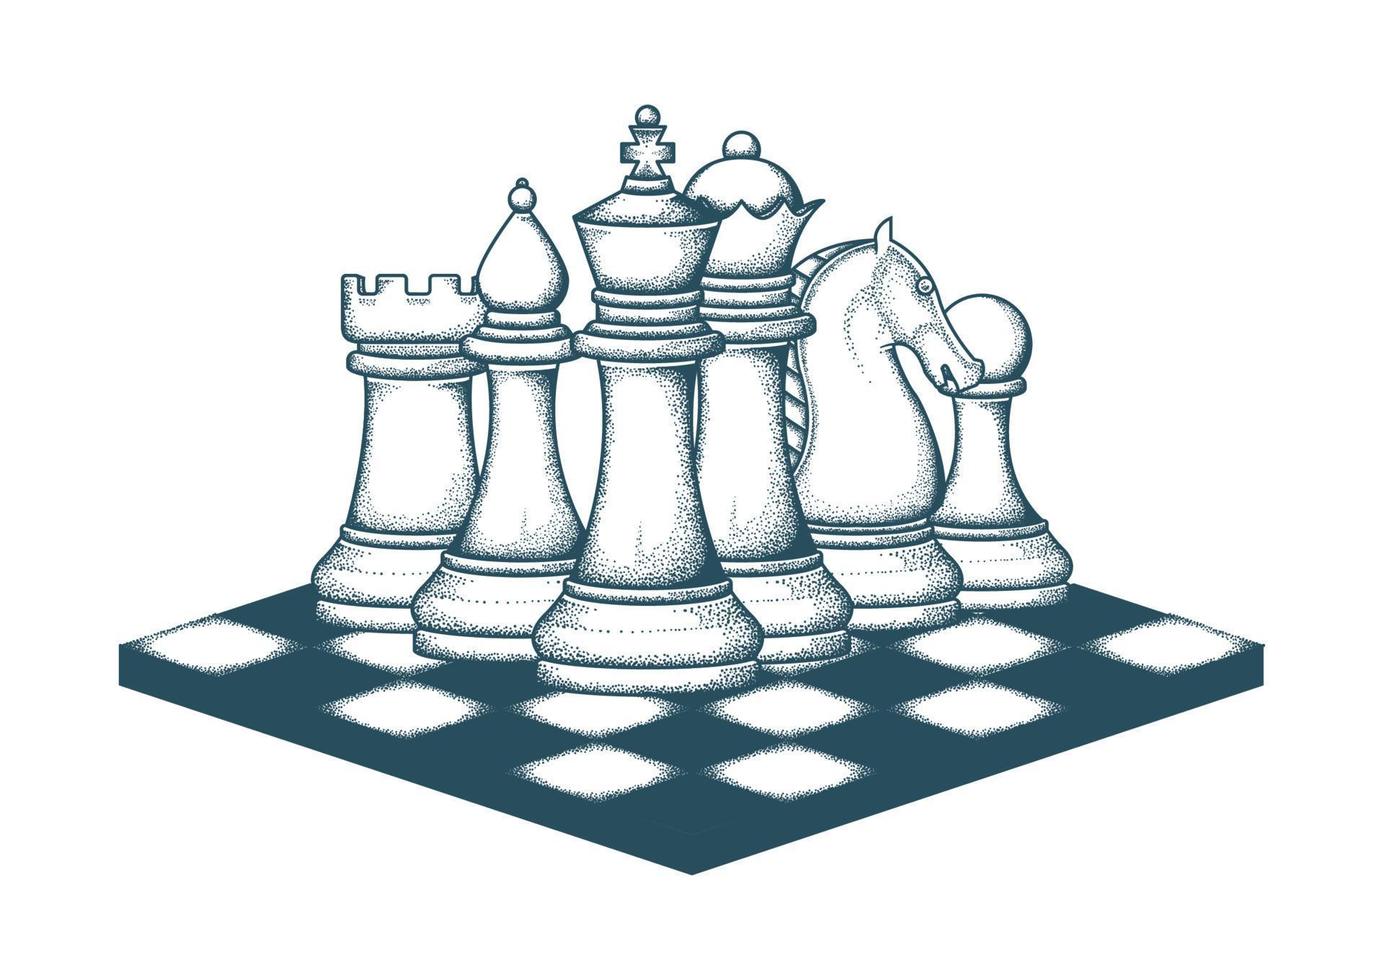 Caricatura de xadrez Imagens de Stock de Arte Vetorial